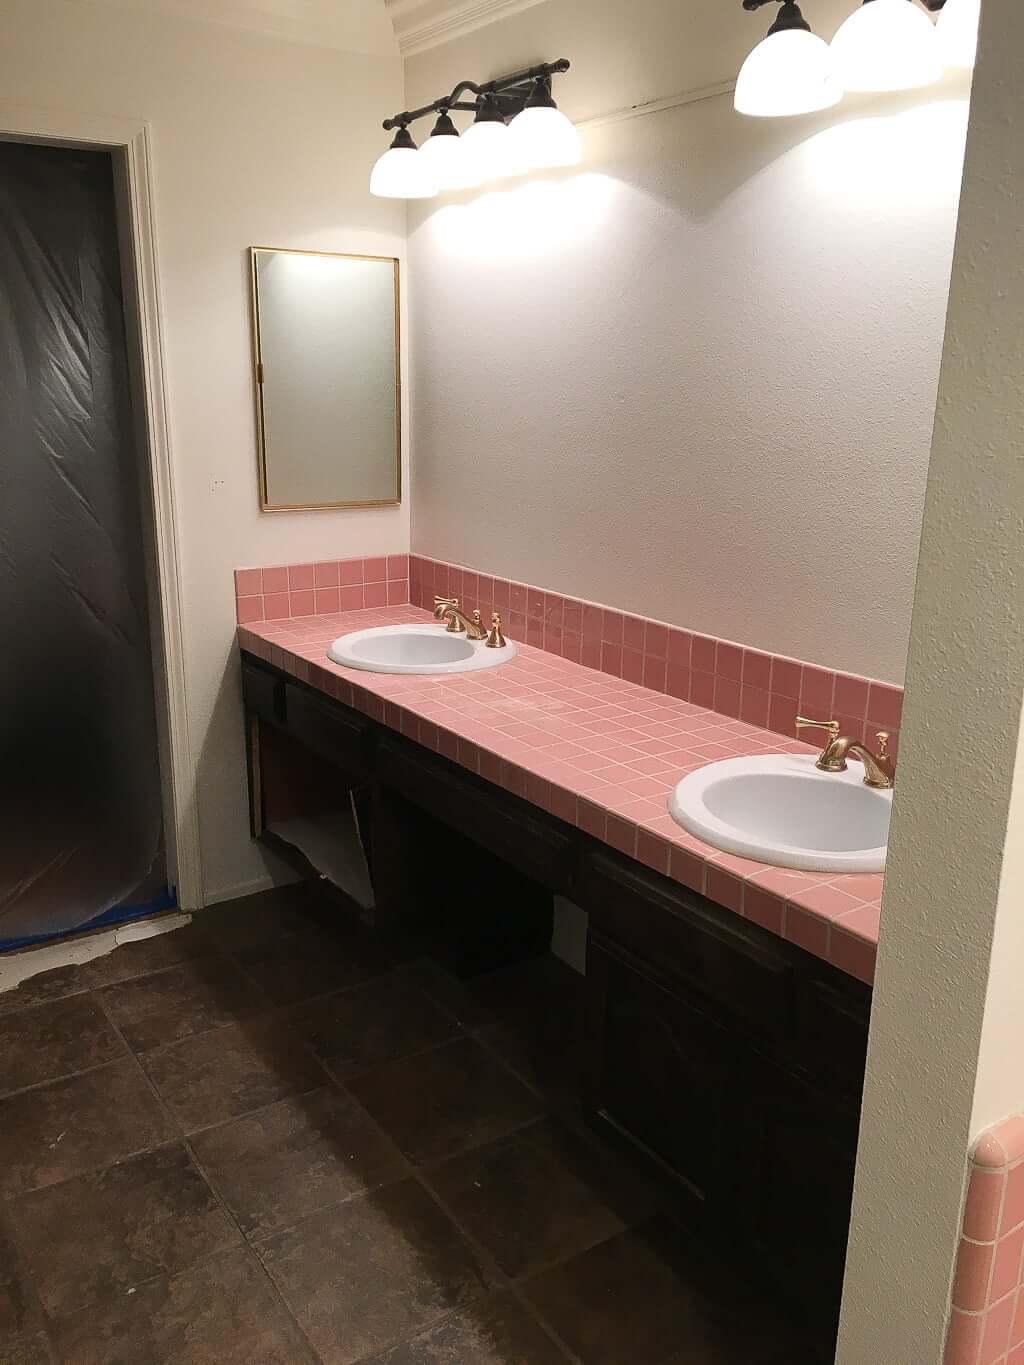 bathroom vanity with pink tile counter and dark tile floors